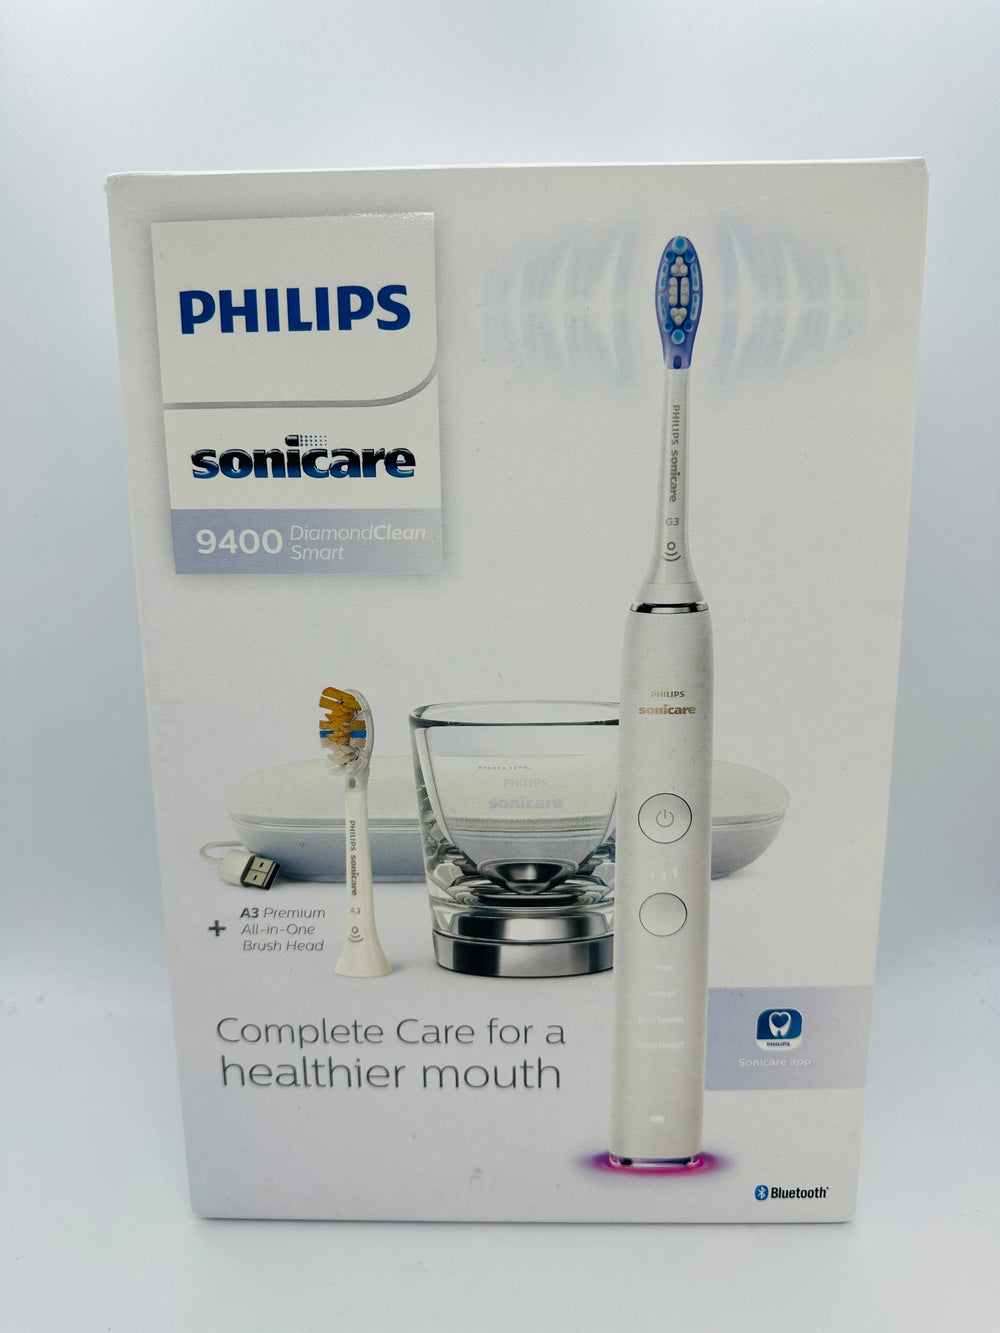 Philips Sonicare Diamond Clean Smart 9400